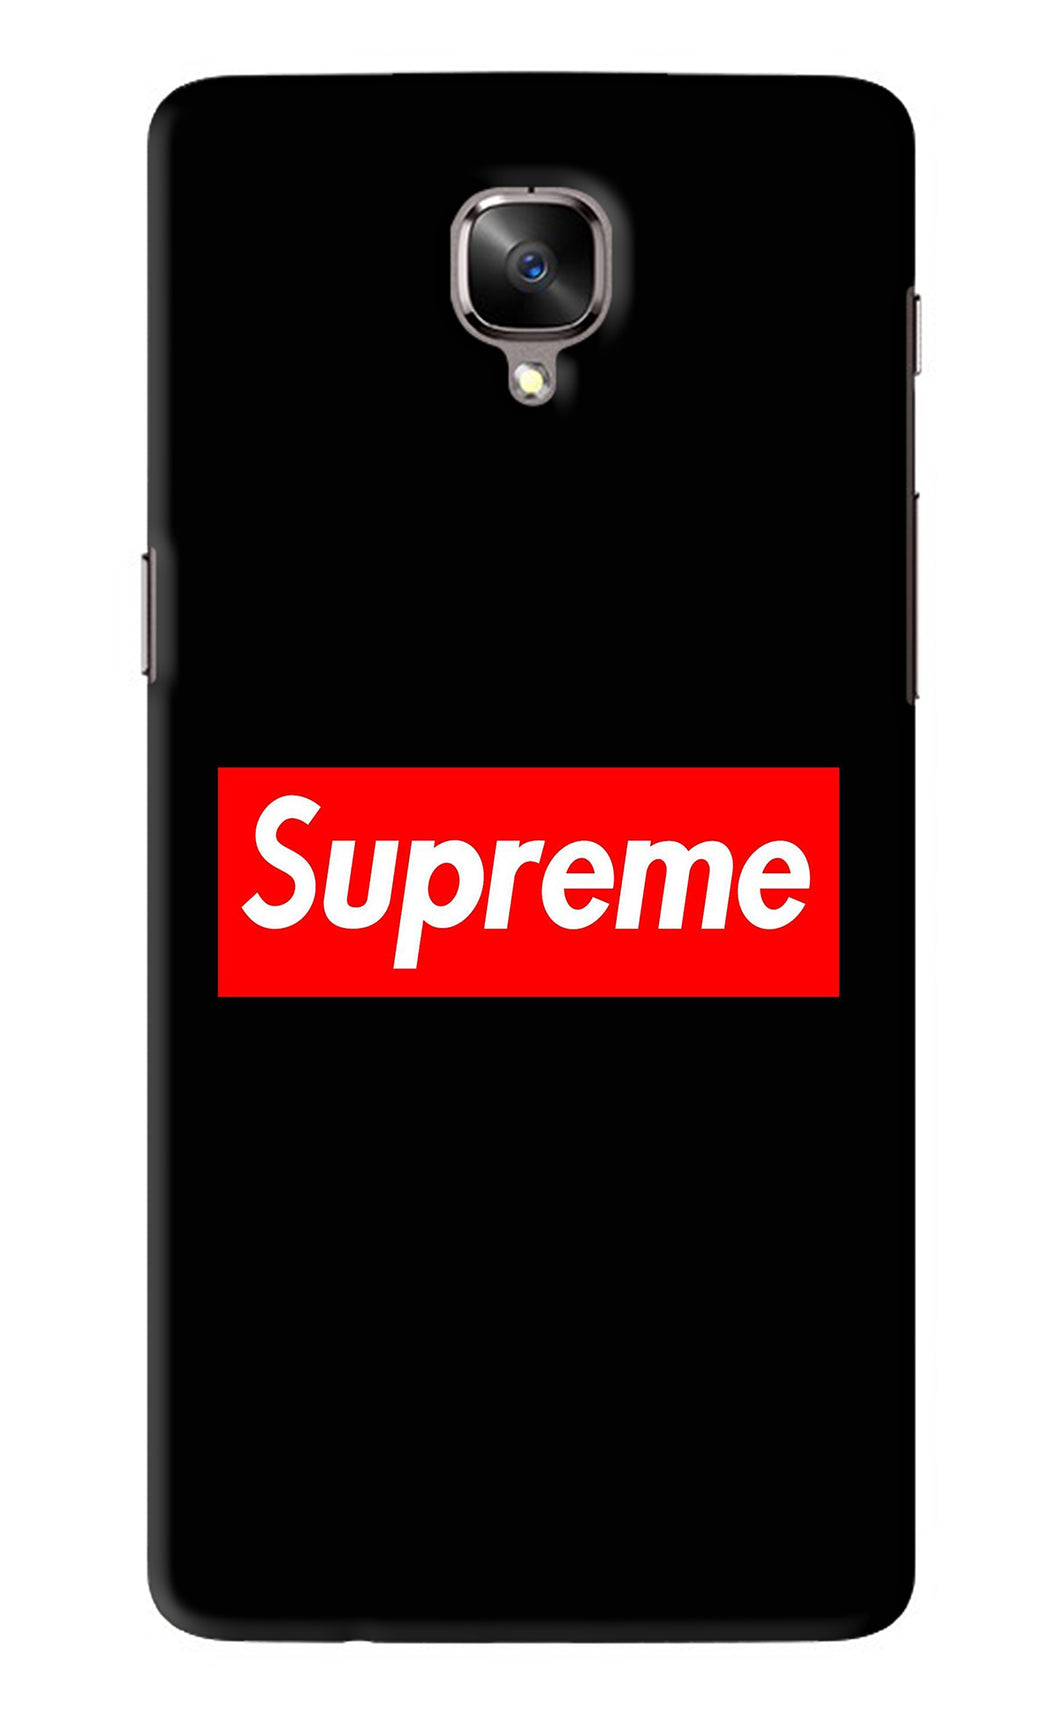 Supreme OnePlus 3T Back Skin Wrap